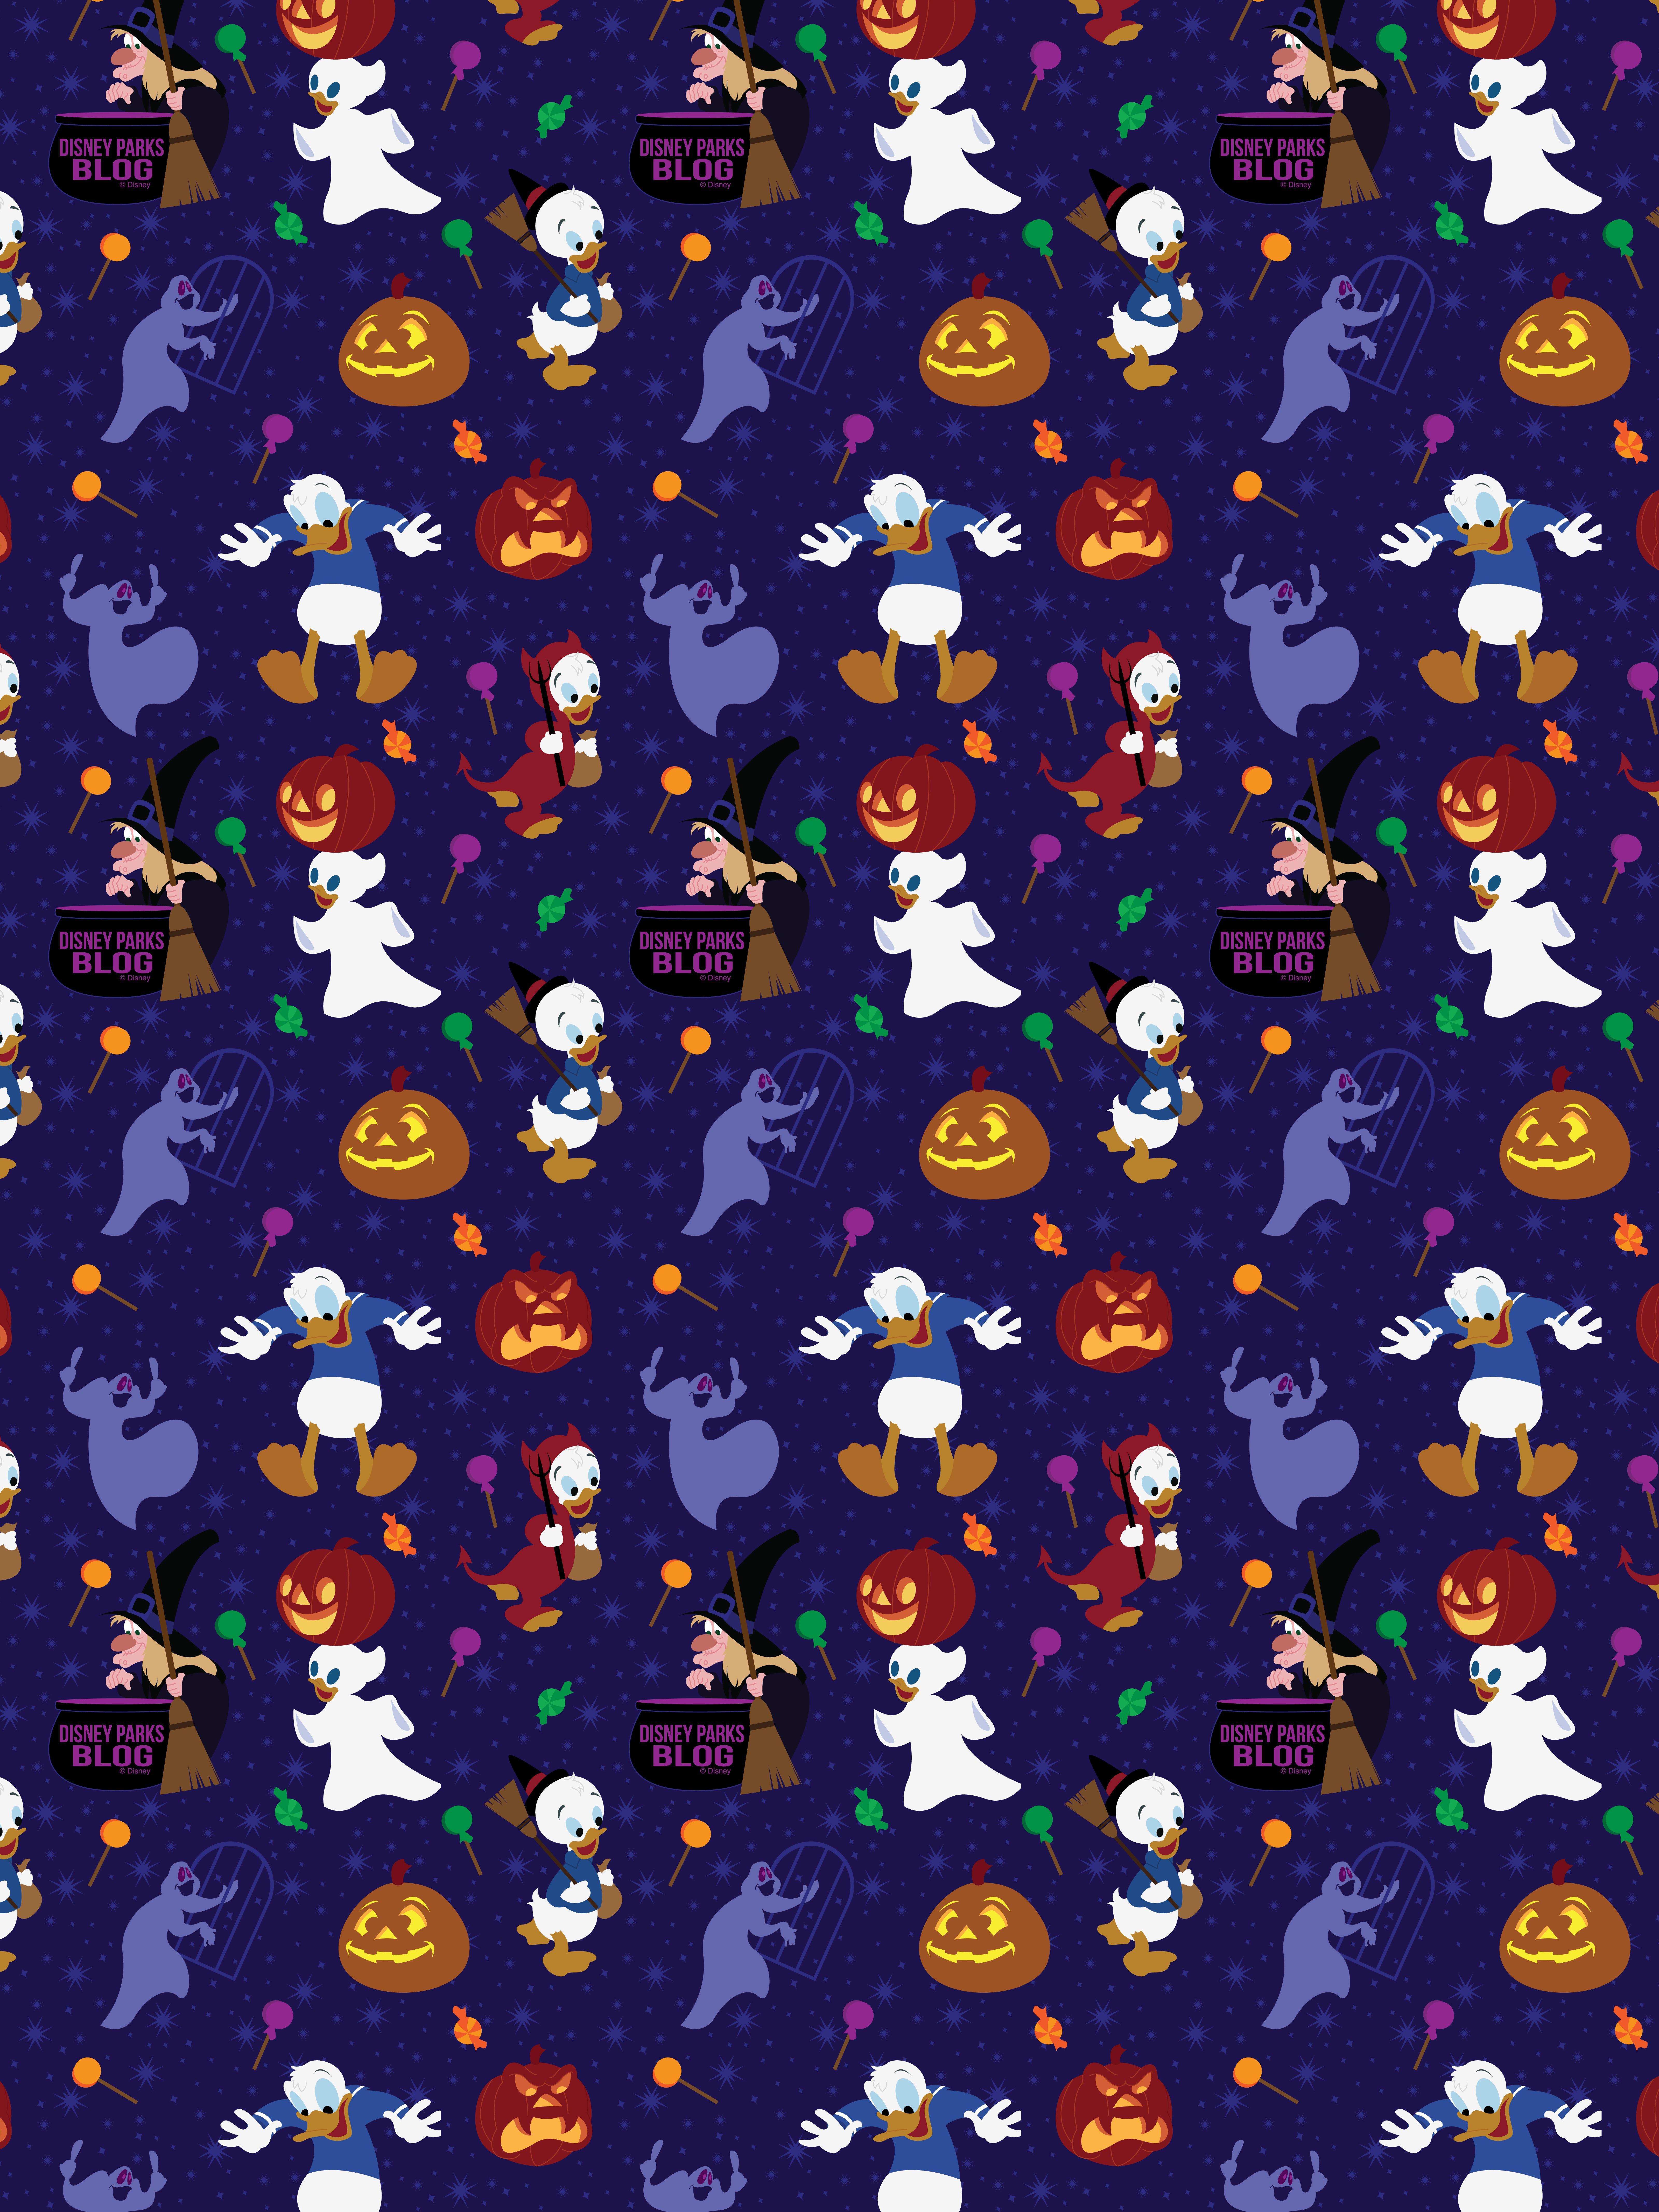 Free Halloween Wallpaper From Disney! Blog Wallpaper 2019 Donald Duck Halloween Wallpaper Iphone Android